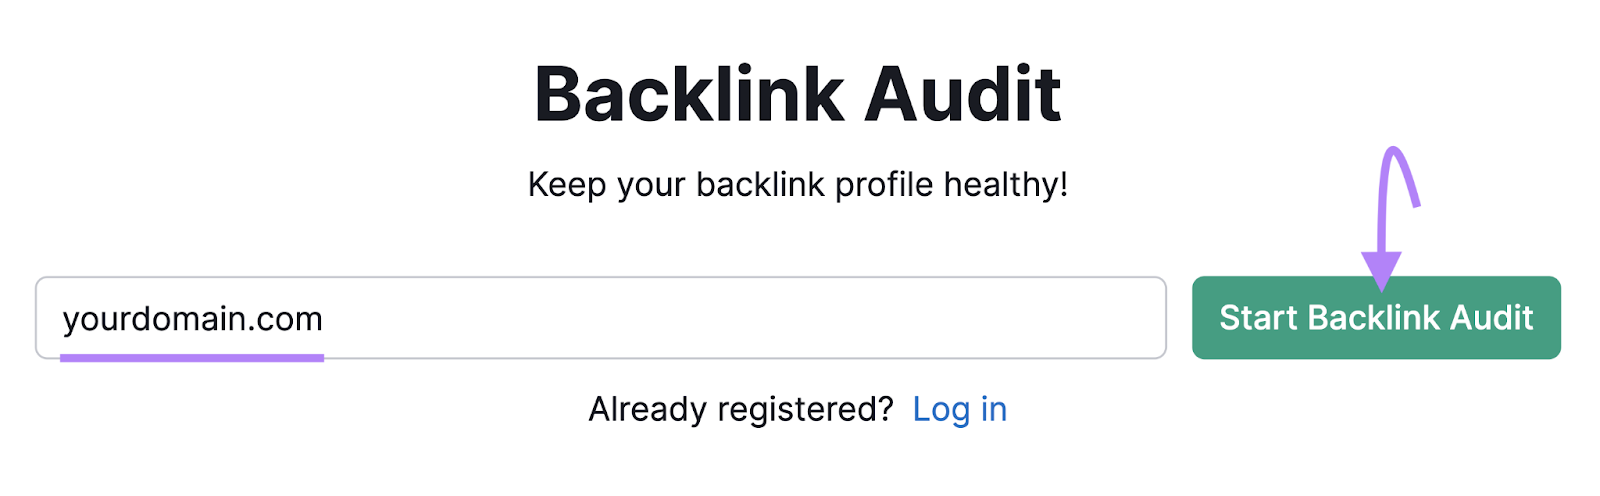 Backlink Audit tool search bar